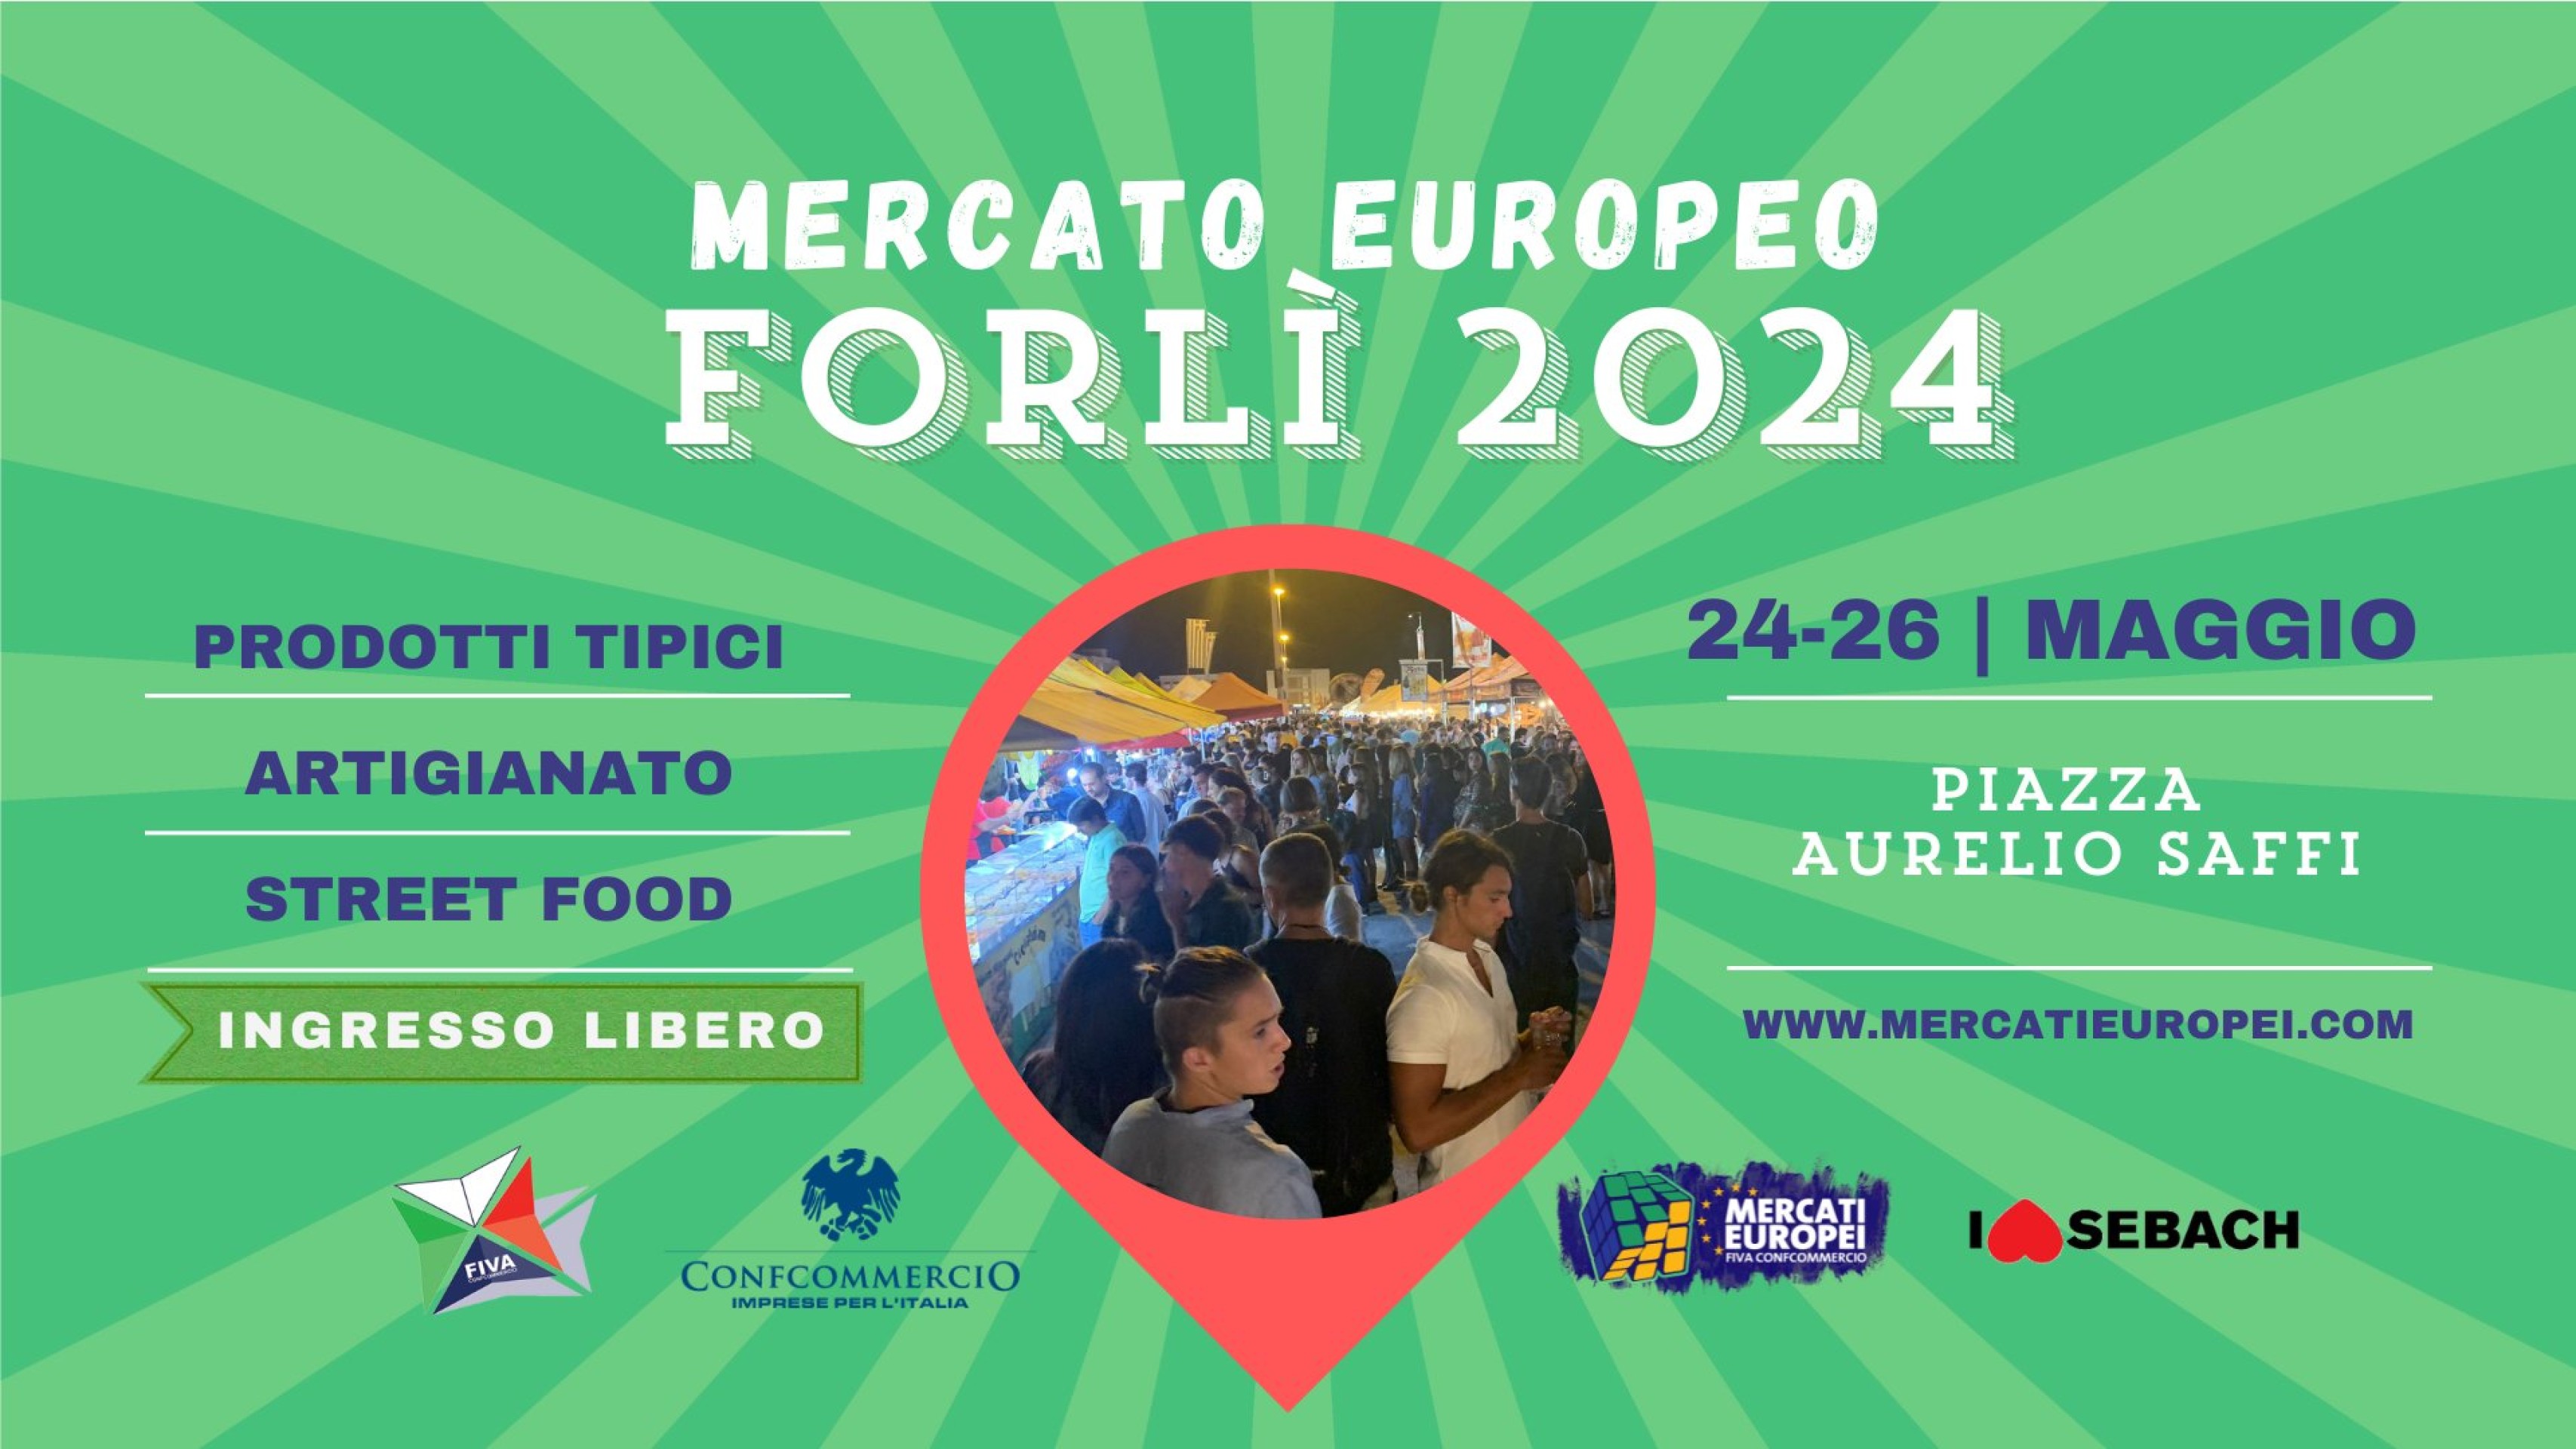 MERCATO EUROPEO FIVA - FORLI' 2024